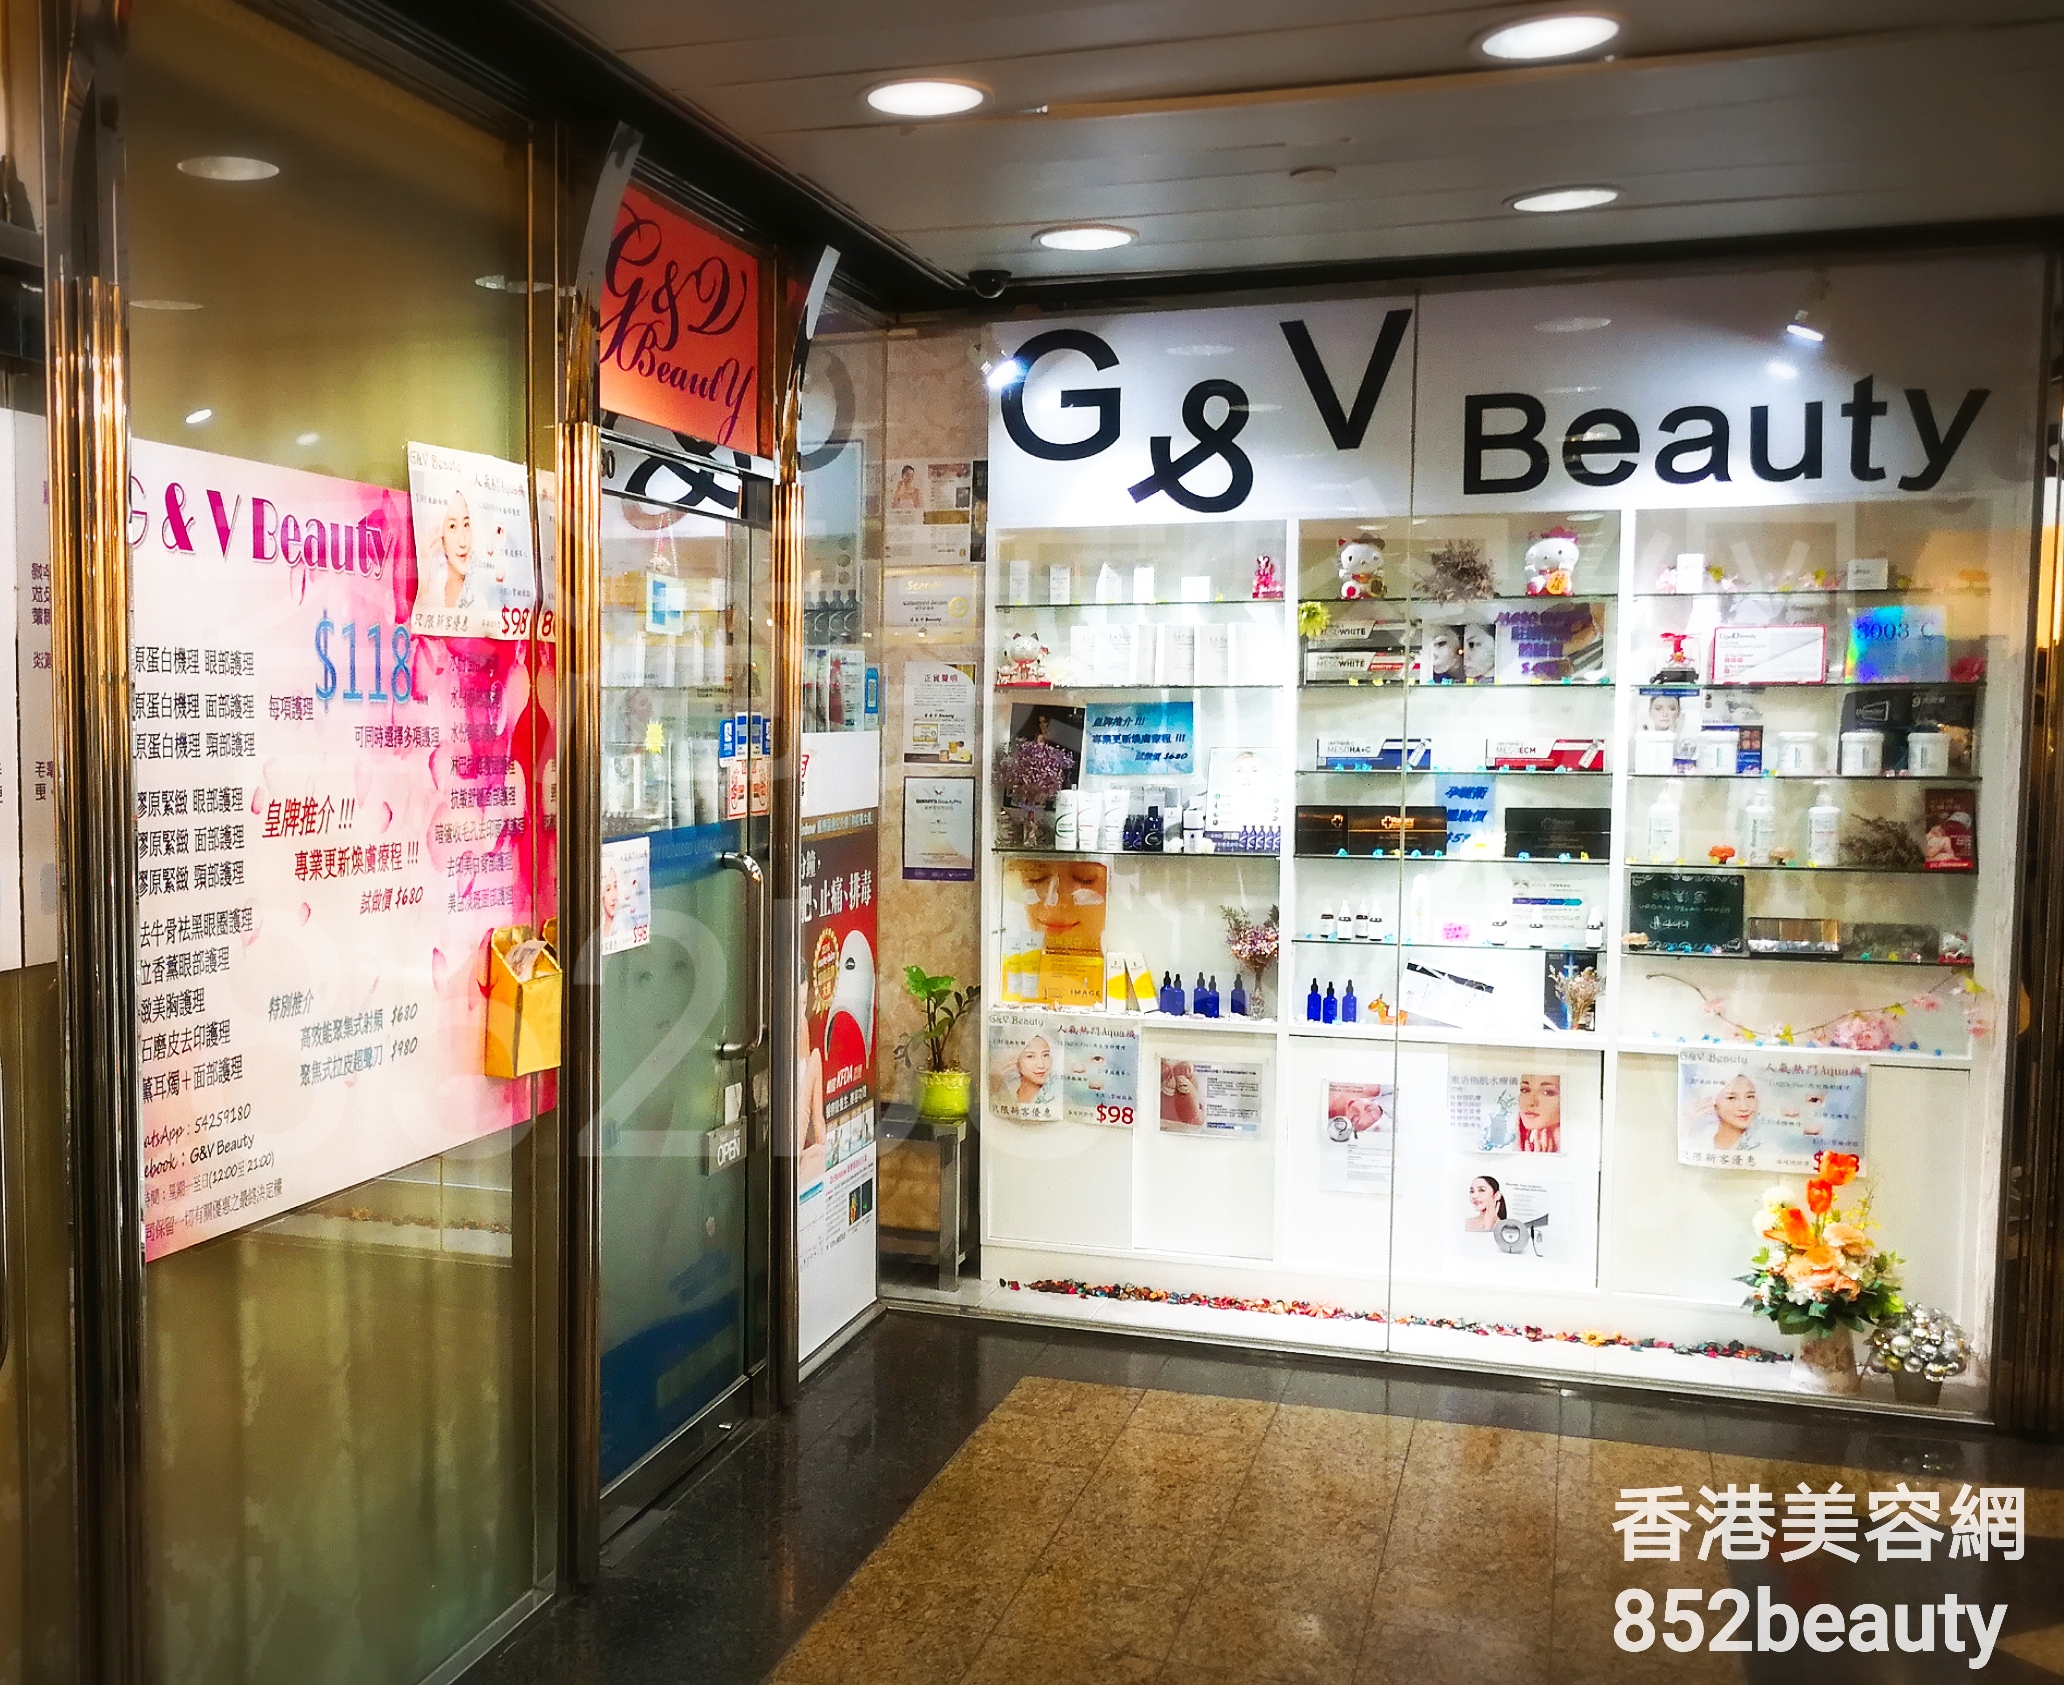 美容院 Beauty Salon: G&V Beauty